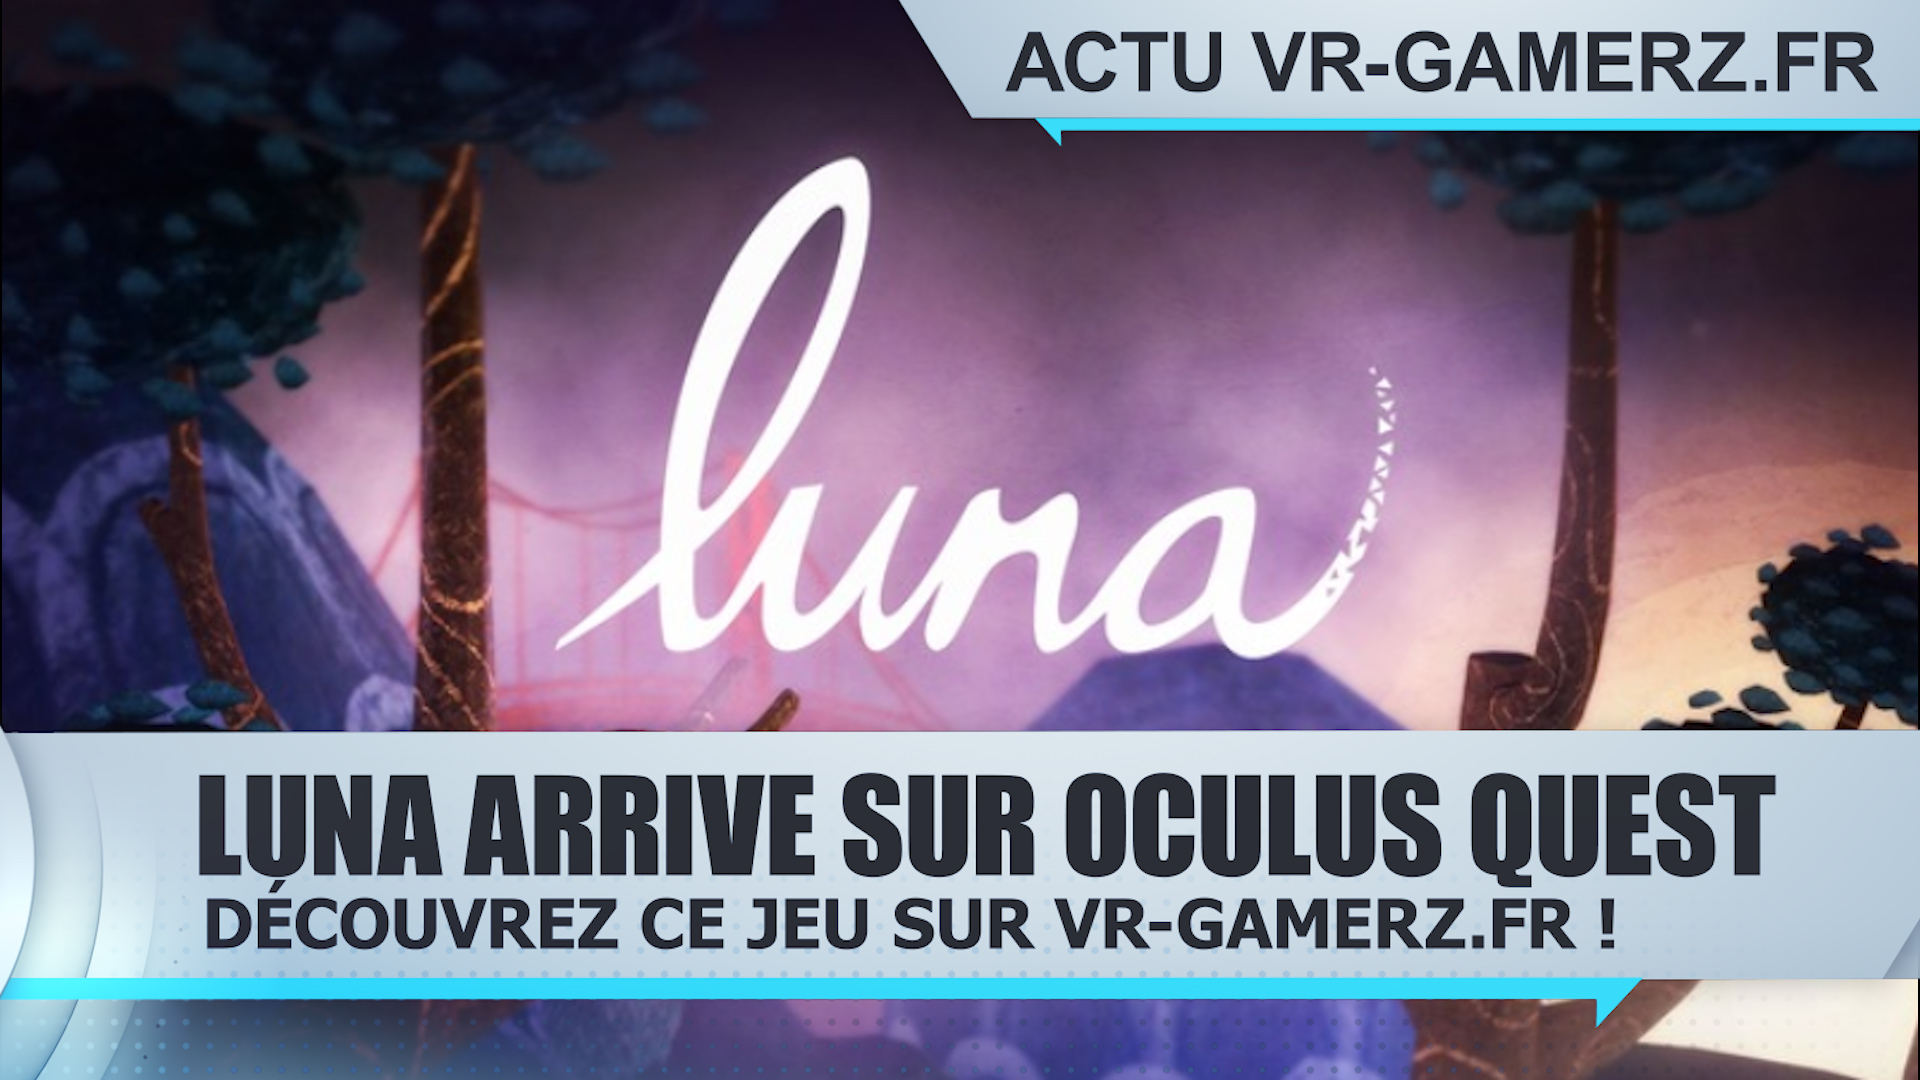 Luna sera disponible demain sur Oculus quest !